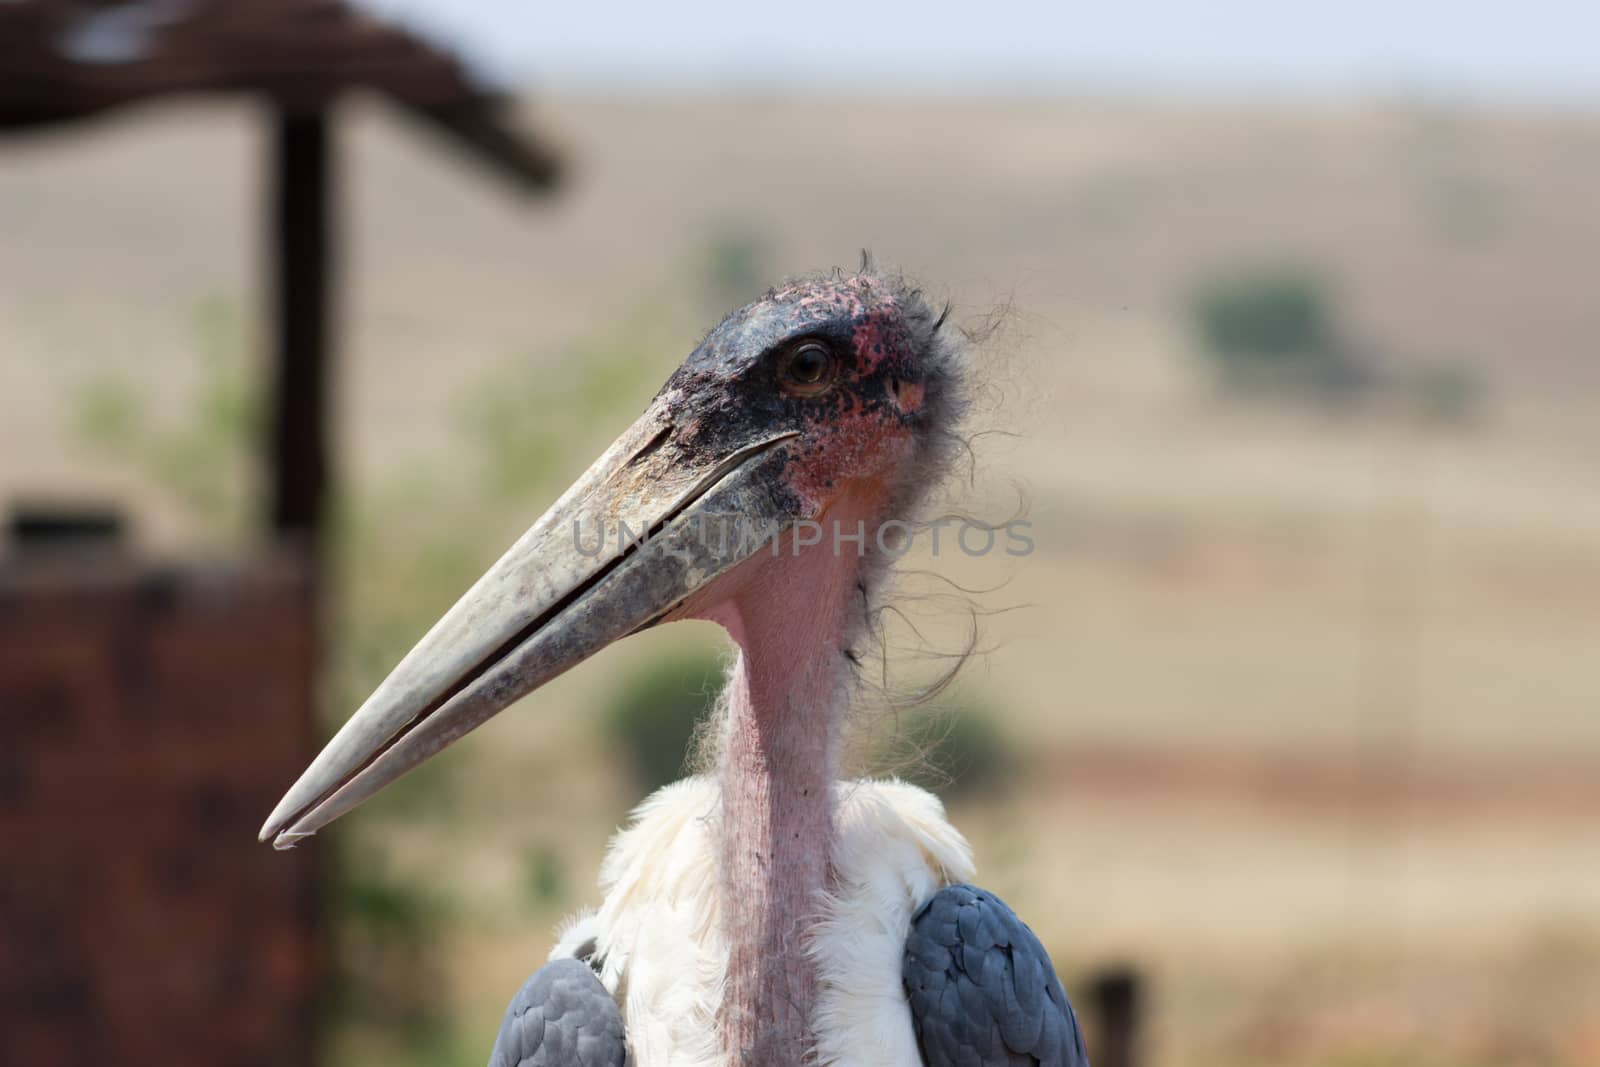 Marabou Stork (Leptoptilos crumenifer) closeup portrait by RiaanAlbrecht